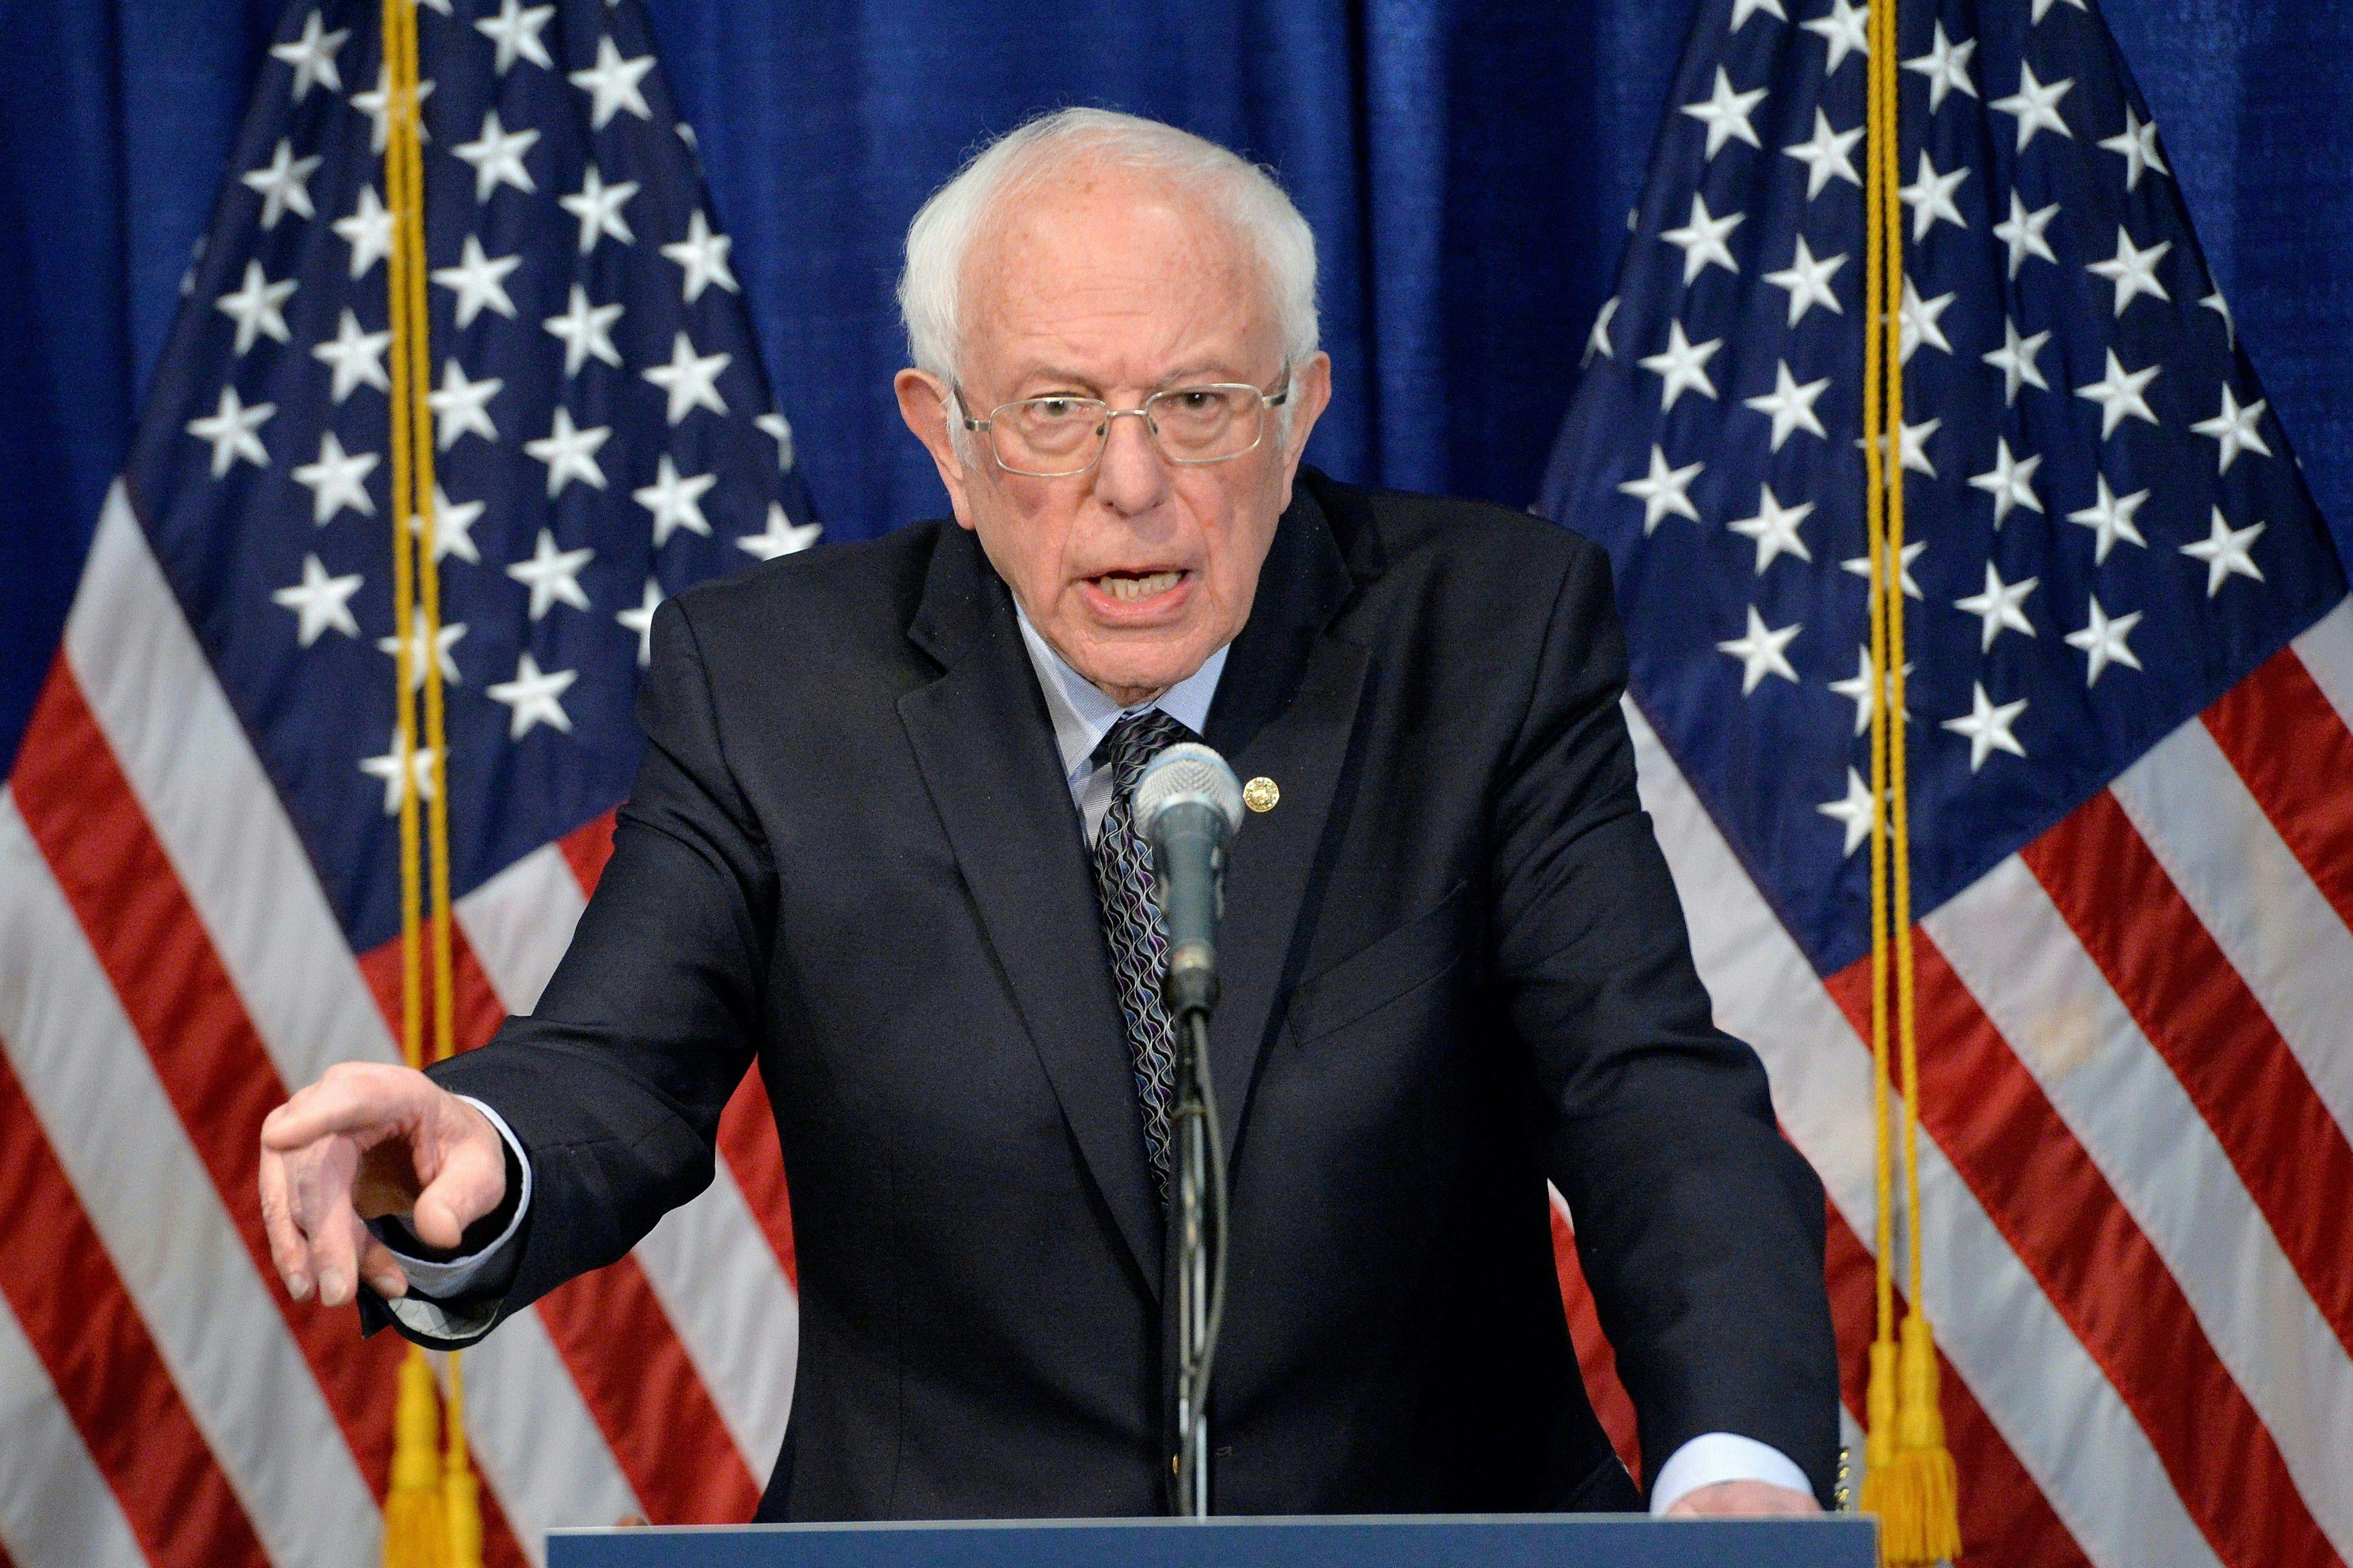 Bernie Sanders speaks at a microphone, in front of two American flags. 